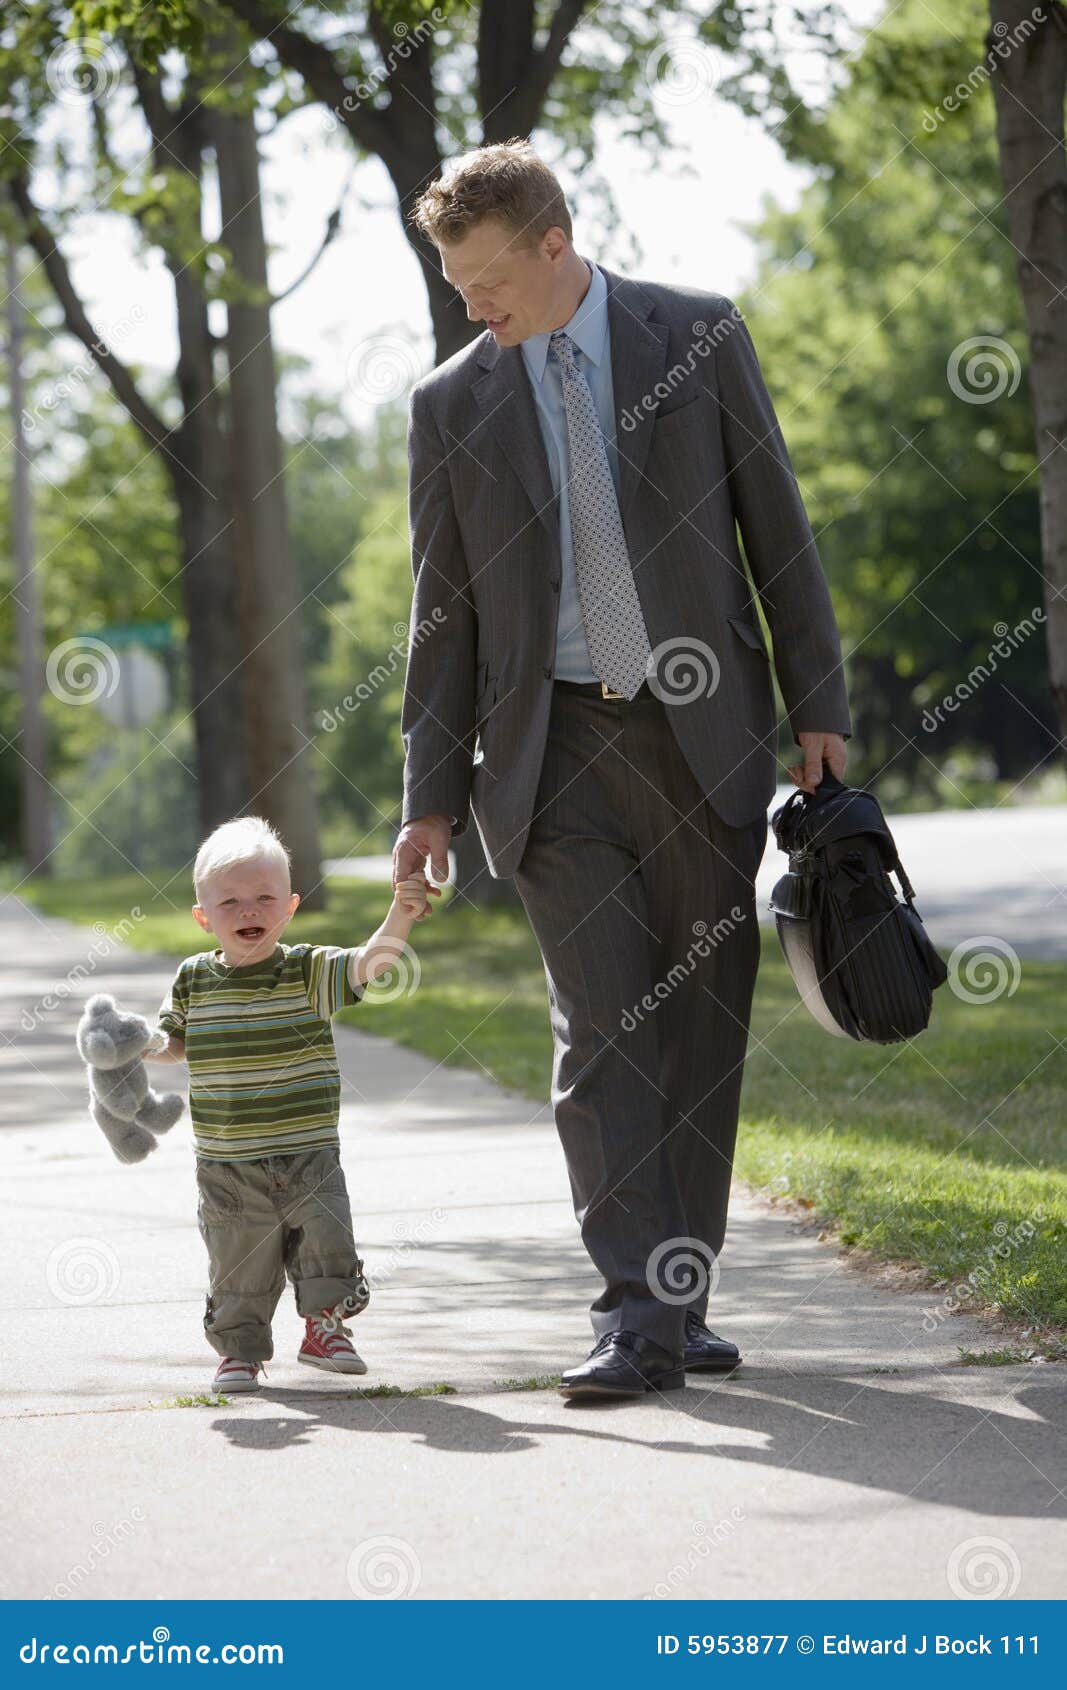 working dad walking his son 5953877